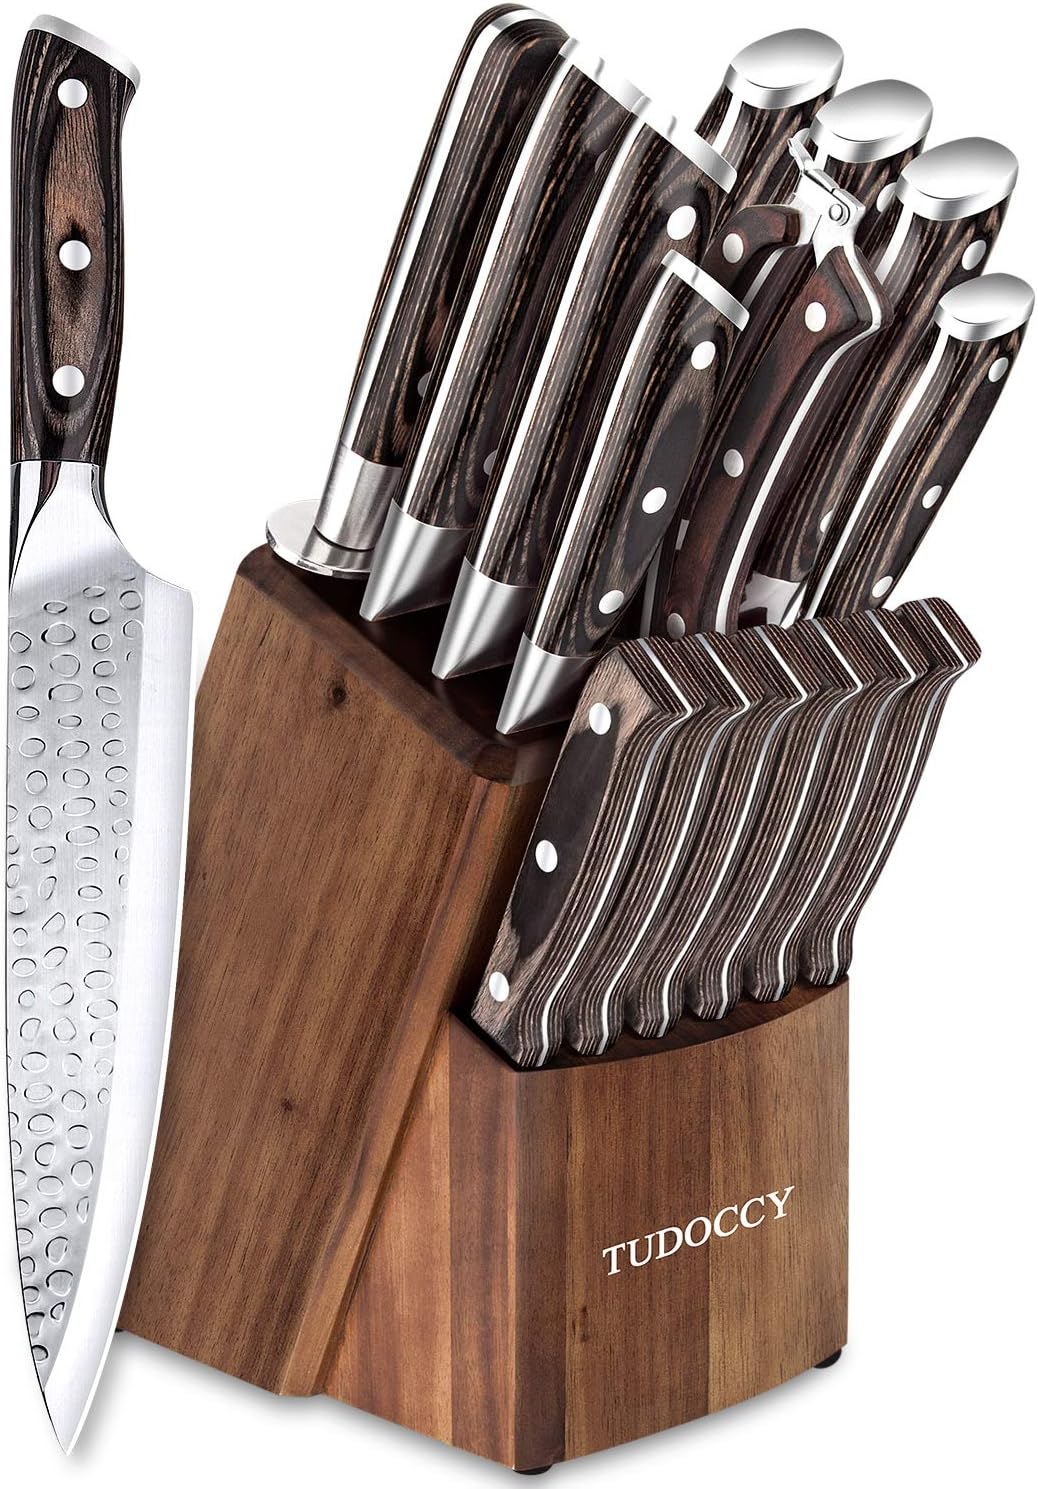 6PCS Pakka Wood Handle Kitchen Knife Set with Wooden Knife Block